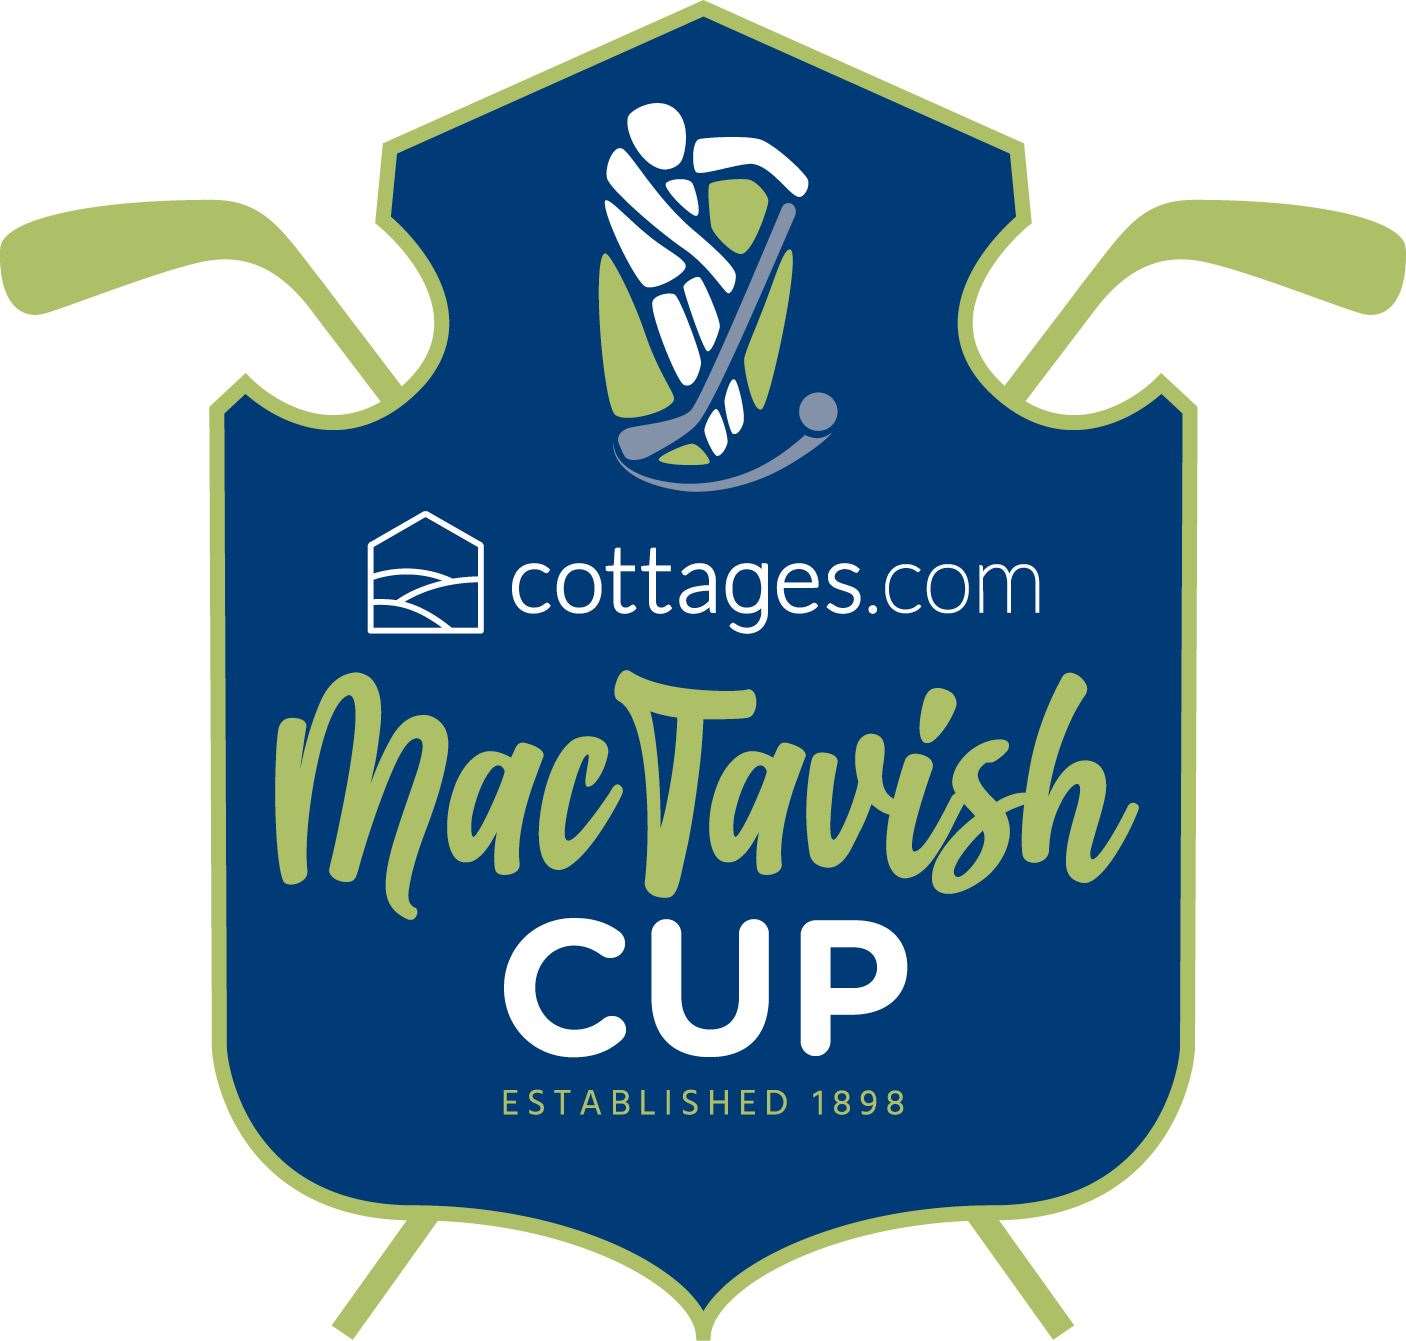 The new logo for the MacTavish Cup.